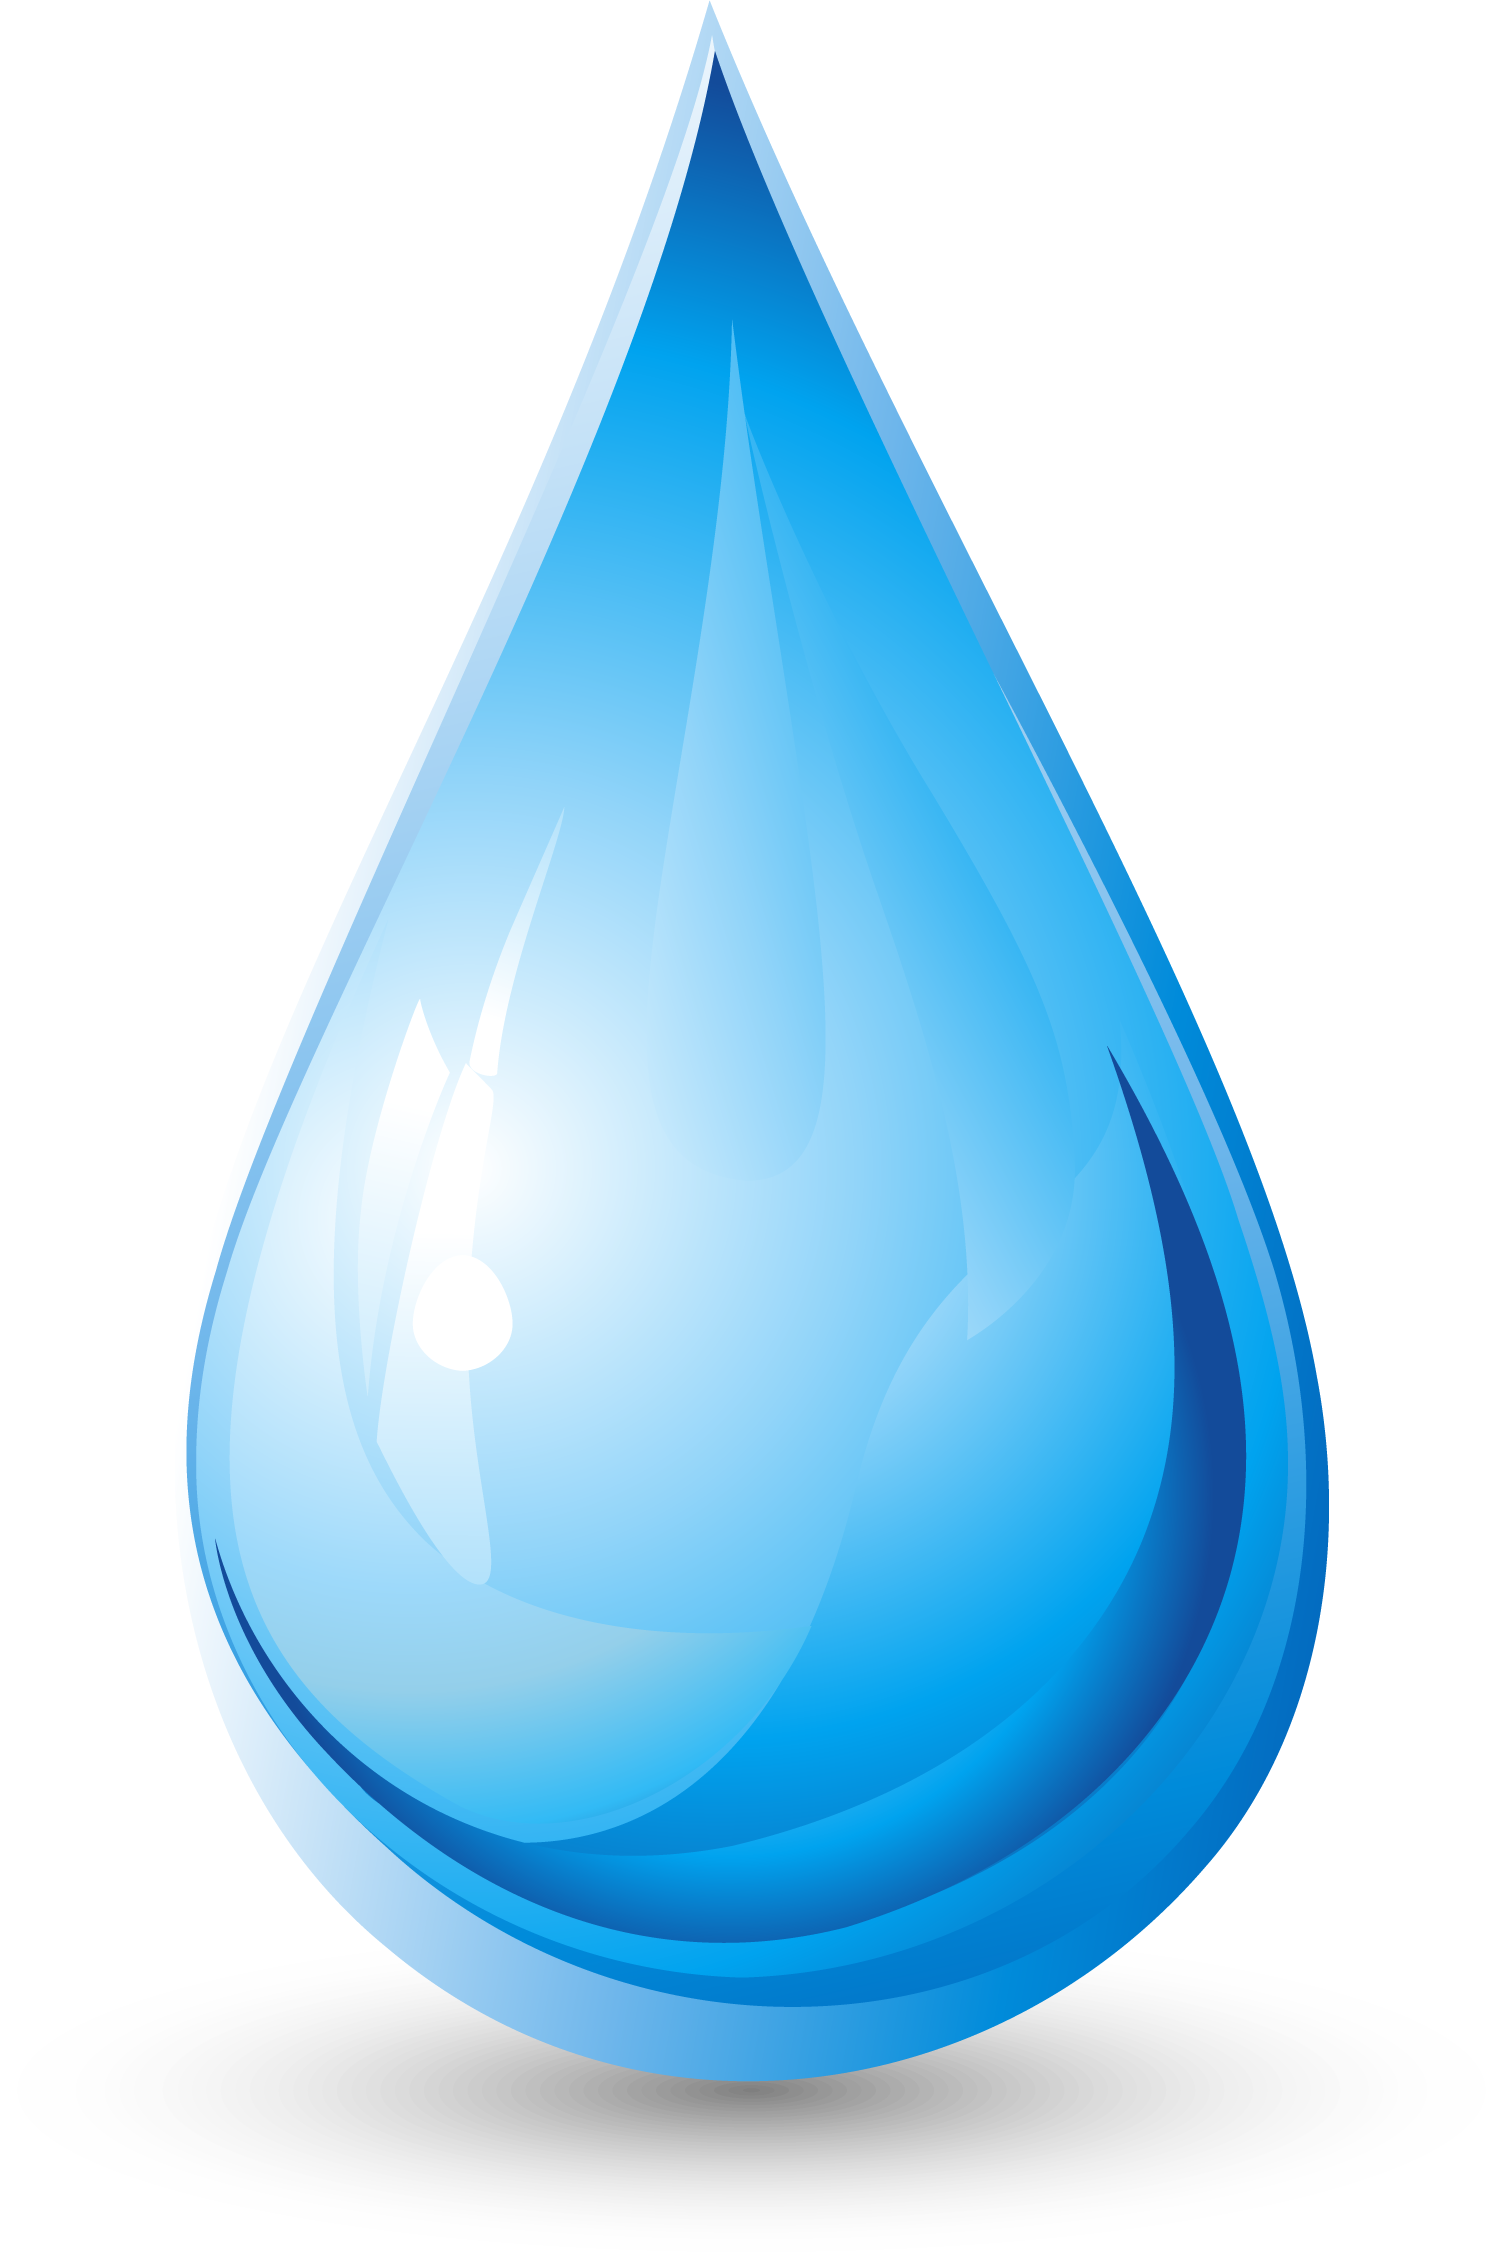 Vector Of Drop Water-Drop Water Free Download Image PNG Image